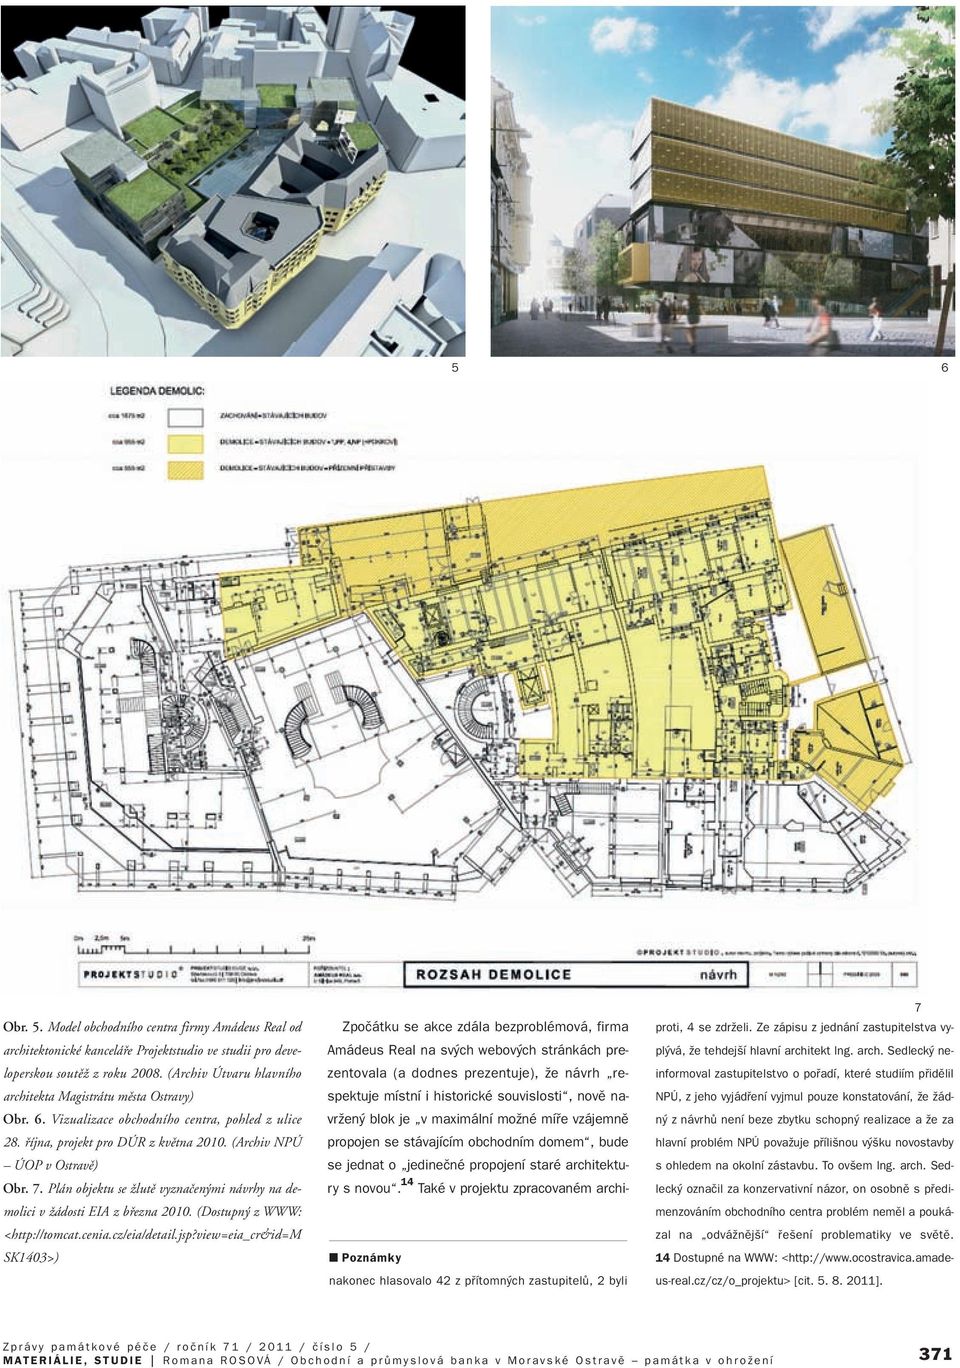 Plán objektu se Ïlutû vyznaãen mi návrhy na demolici v Ïádosti EIA z bfiezna 2010. (Dostupn z WWW: <http://tomcat.cenia.cz/eia/detail.jsp?